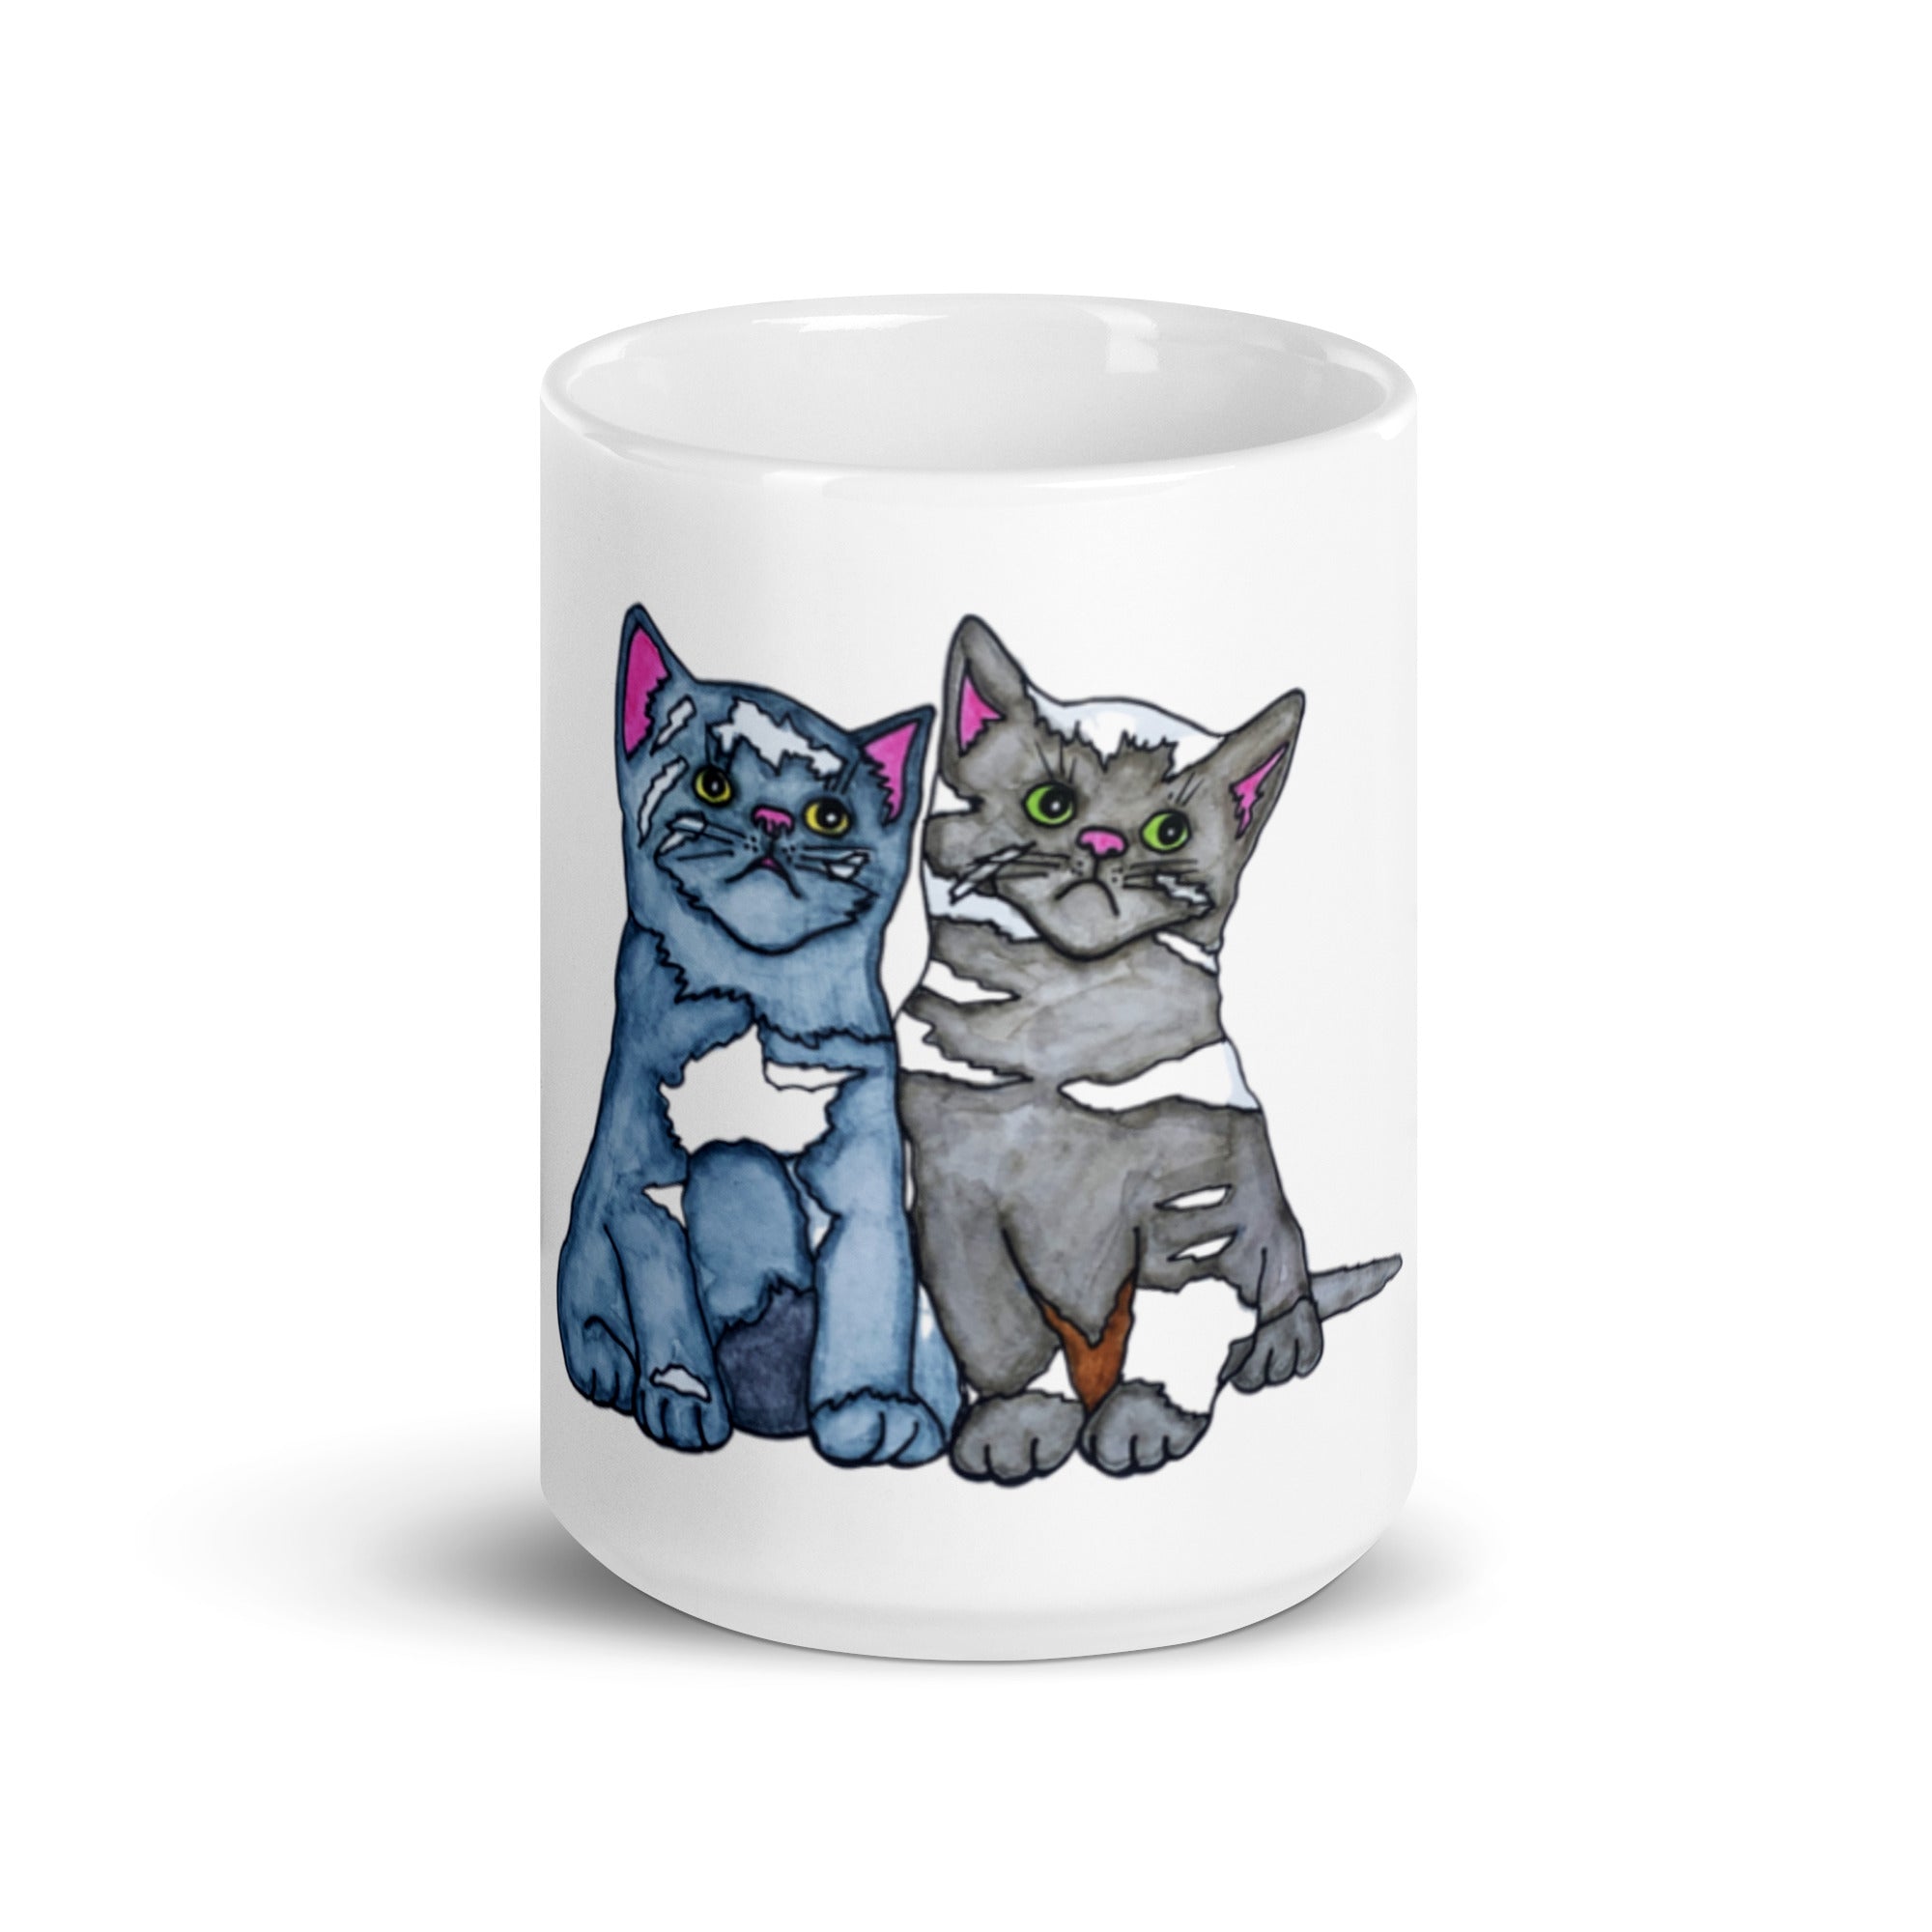 Two Cats White glossy mug - Art Love Decor